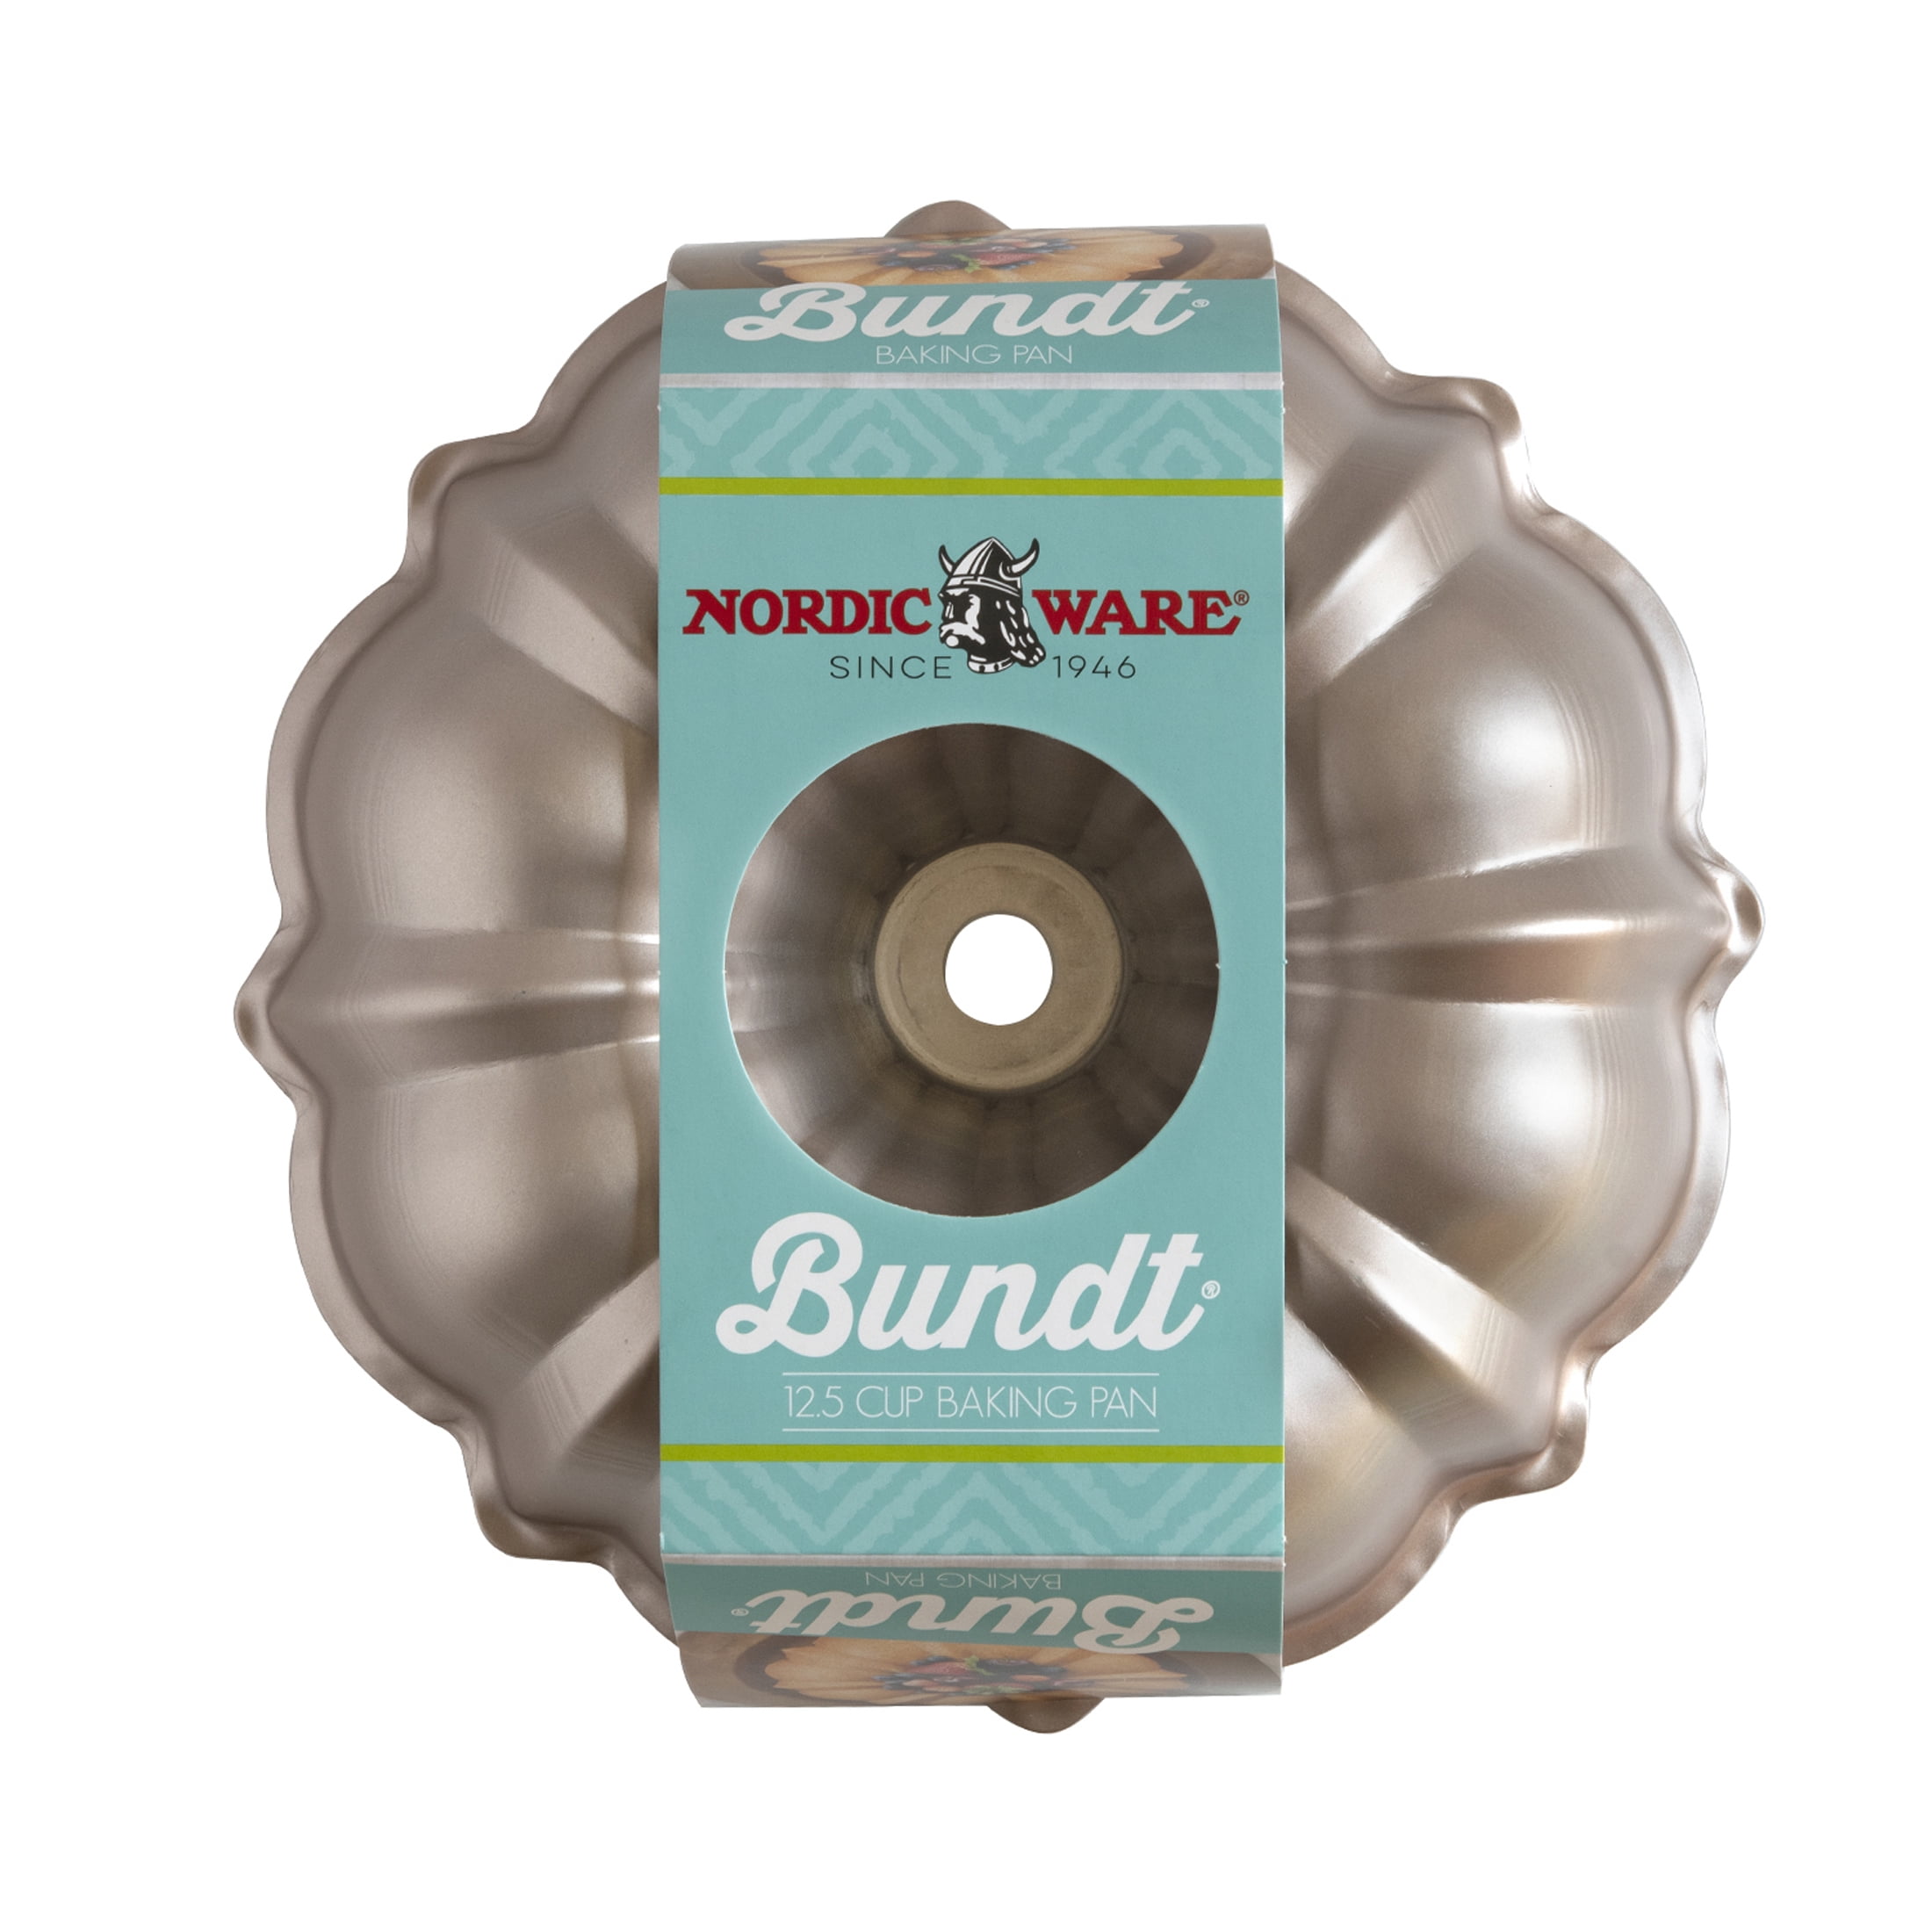 Nordic 51122 Ware Formed Bundt Cake Pan, 12 Cup - Bed Bath & Beyond -  14560689